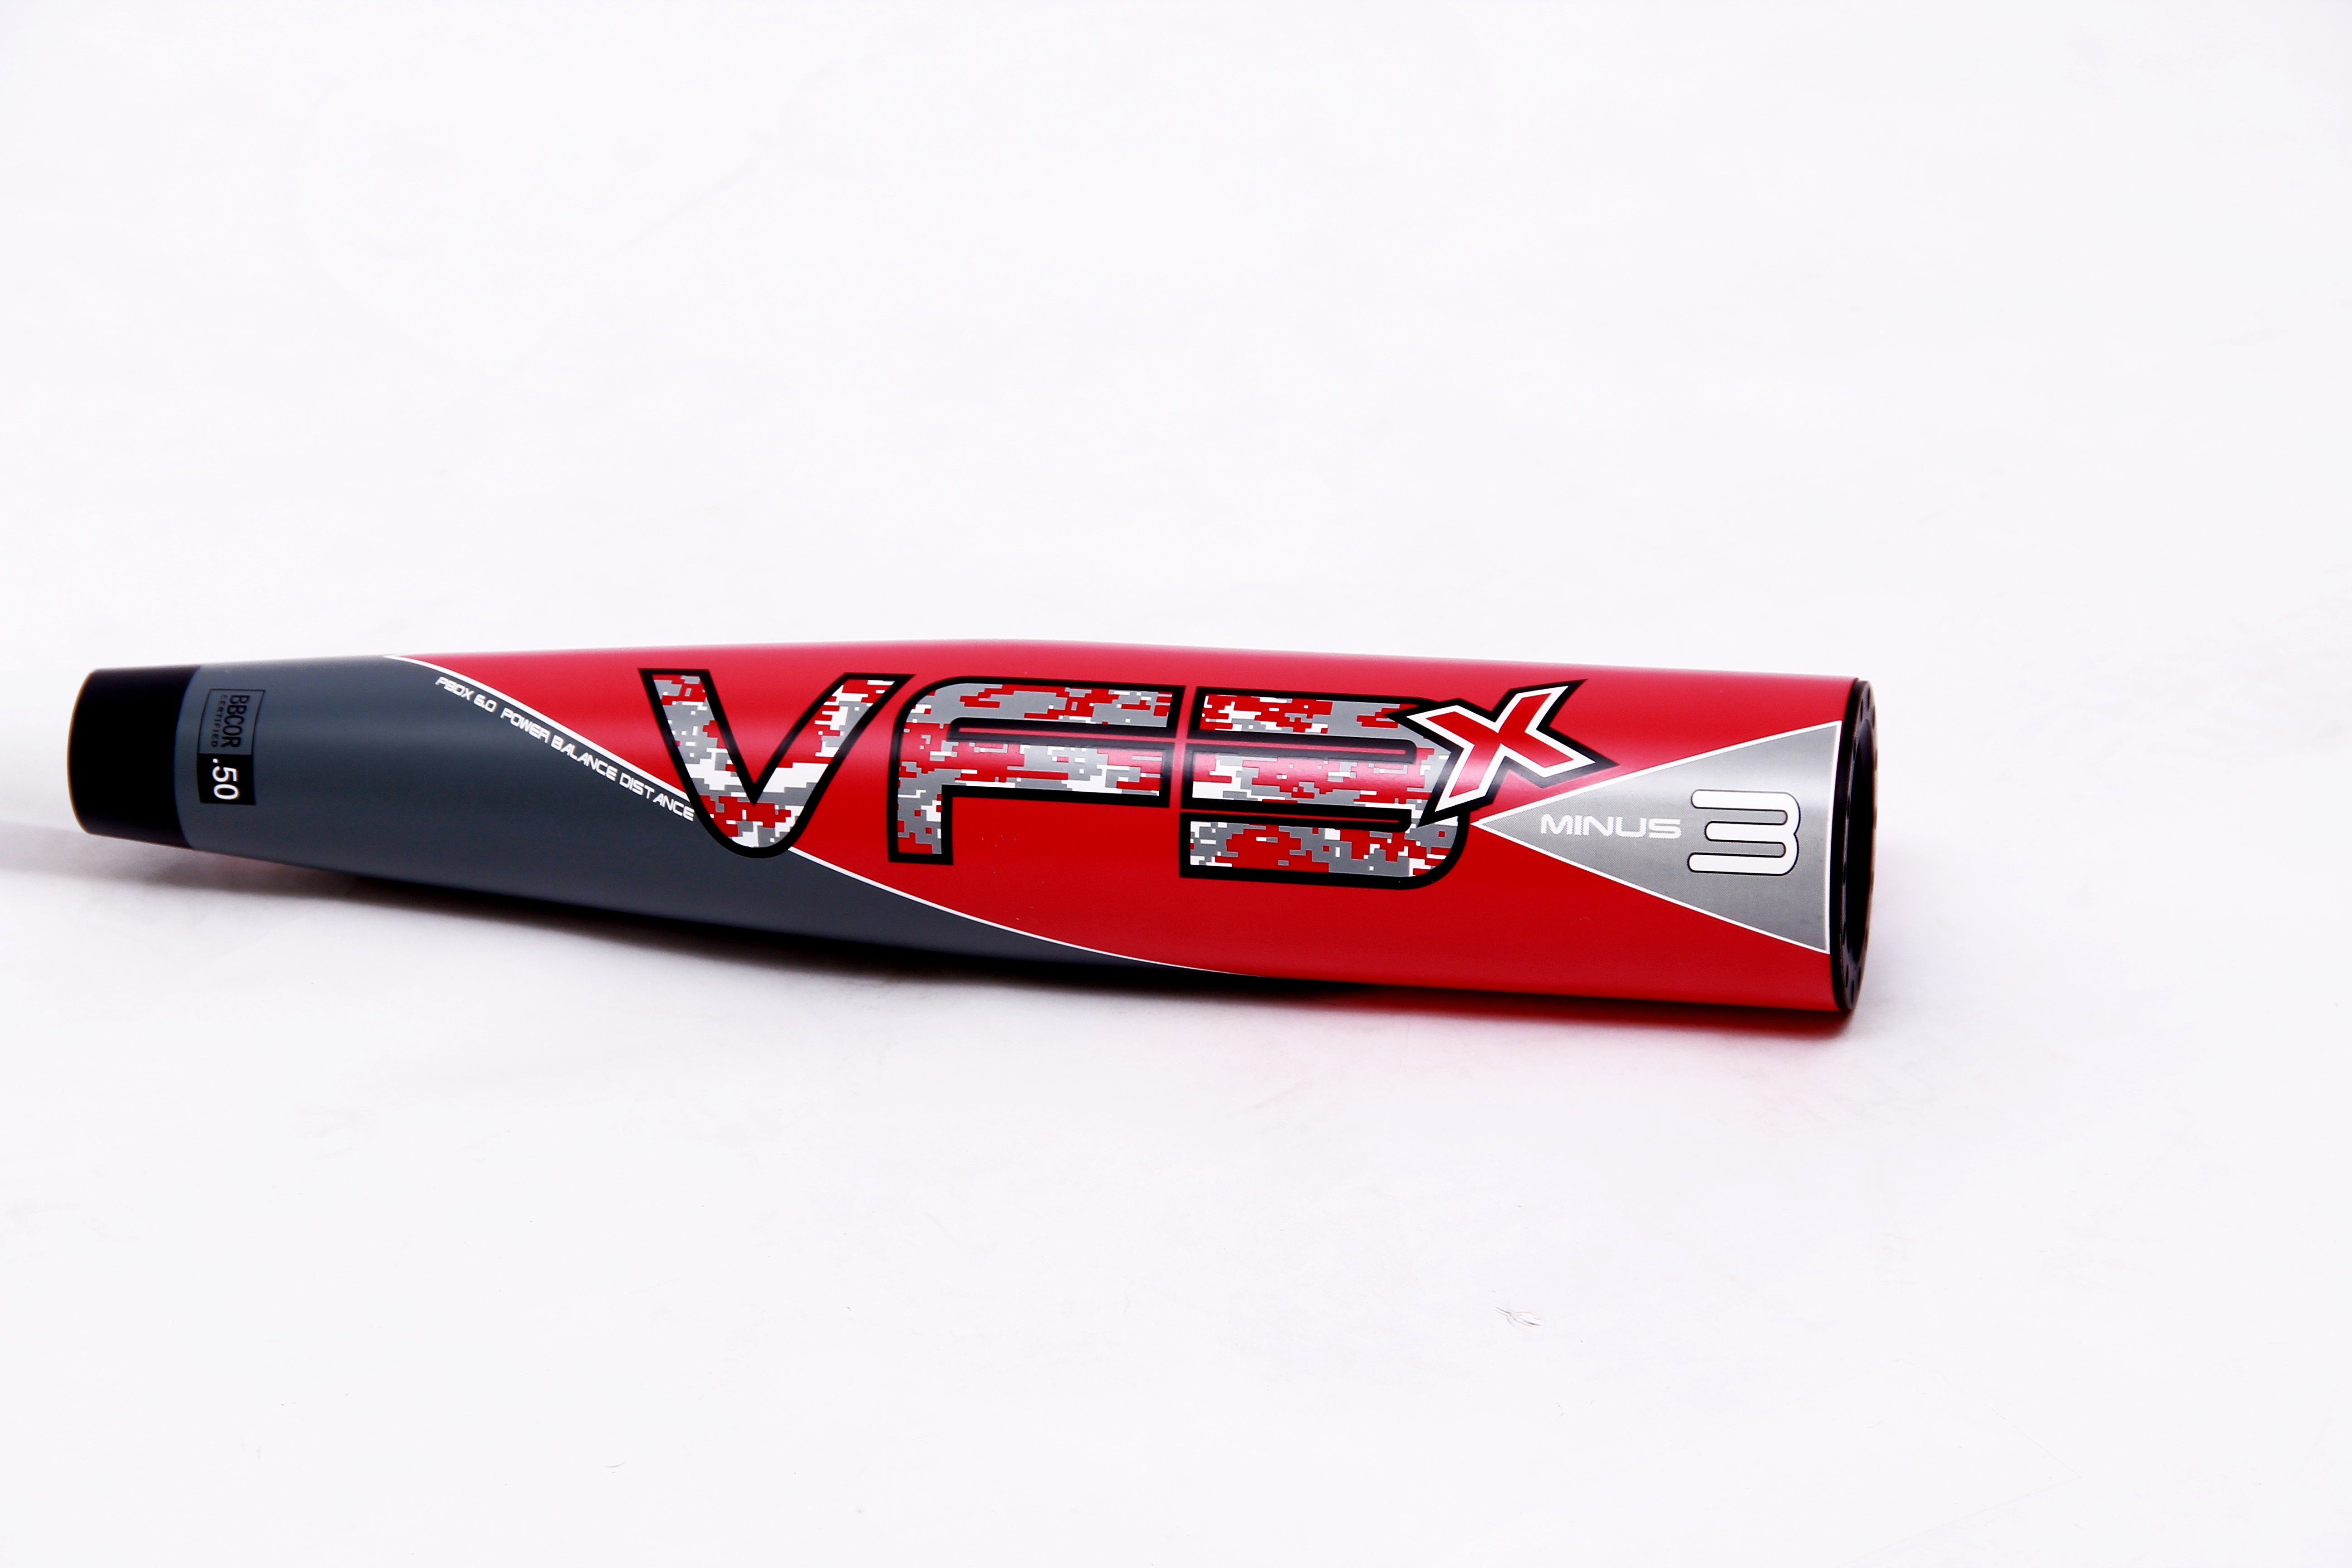 Super Customized Alloy Carbon Hybrid Baseball Bat Hitting Ball